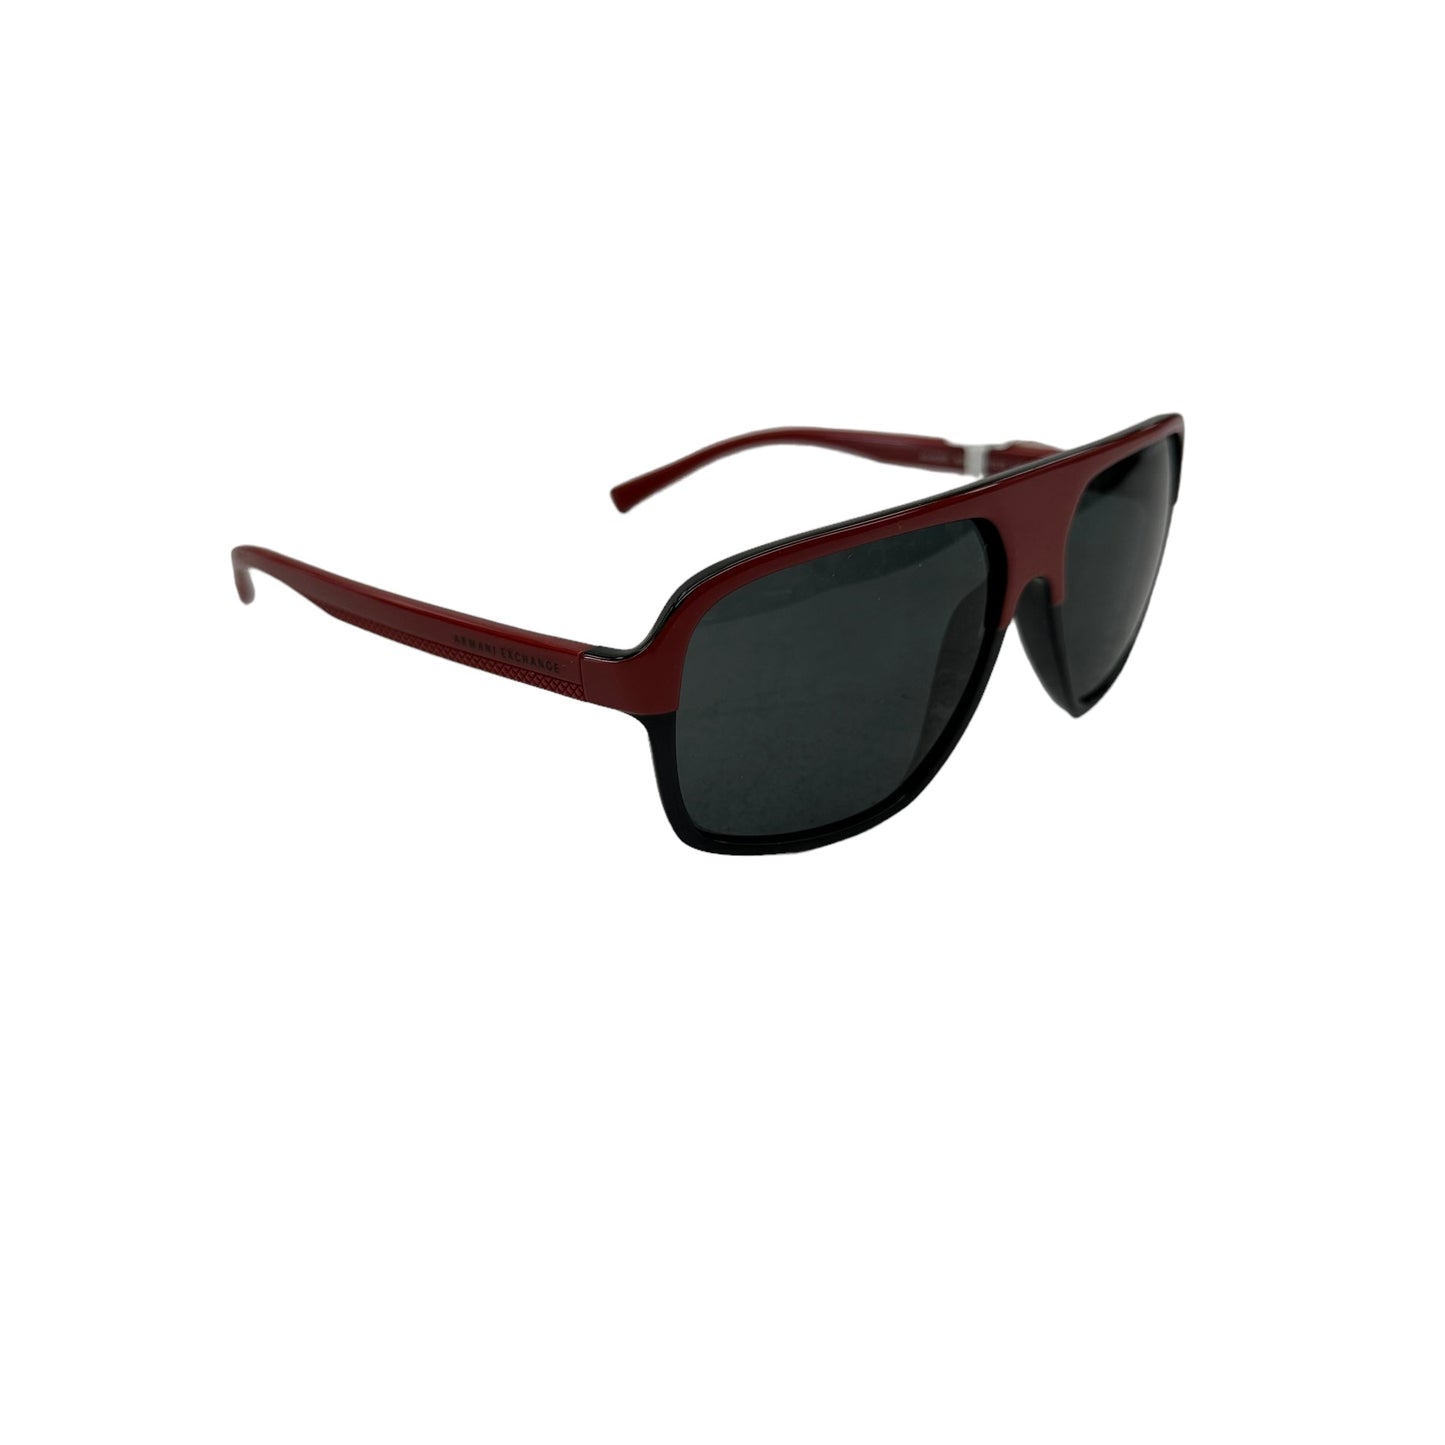 Sunglasses By Armani Exchange